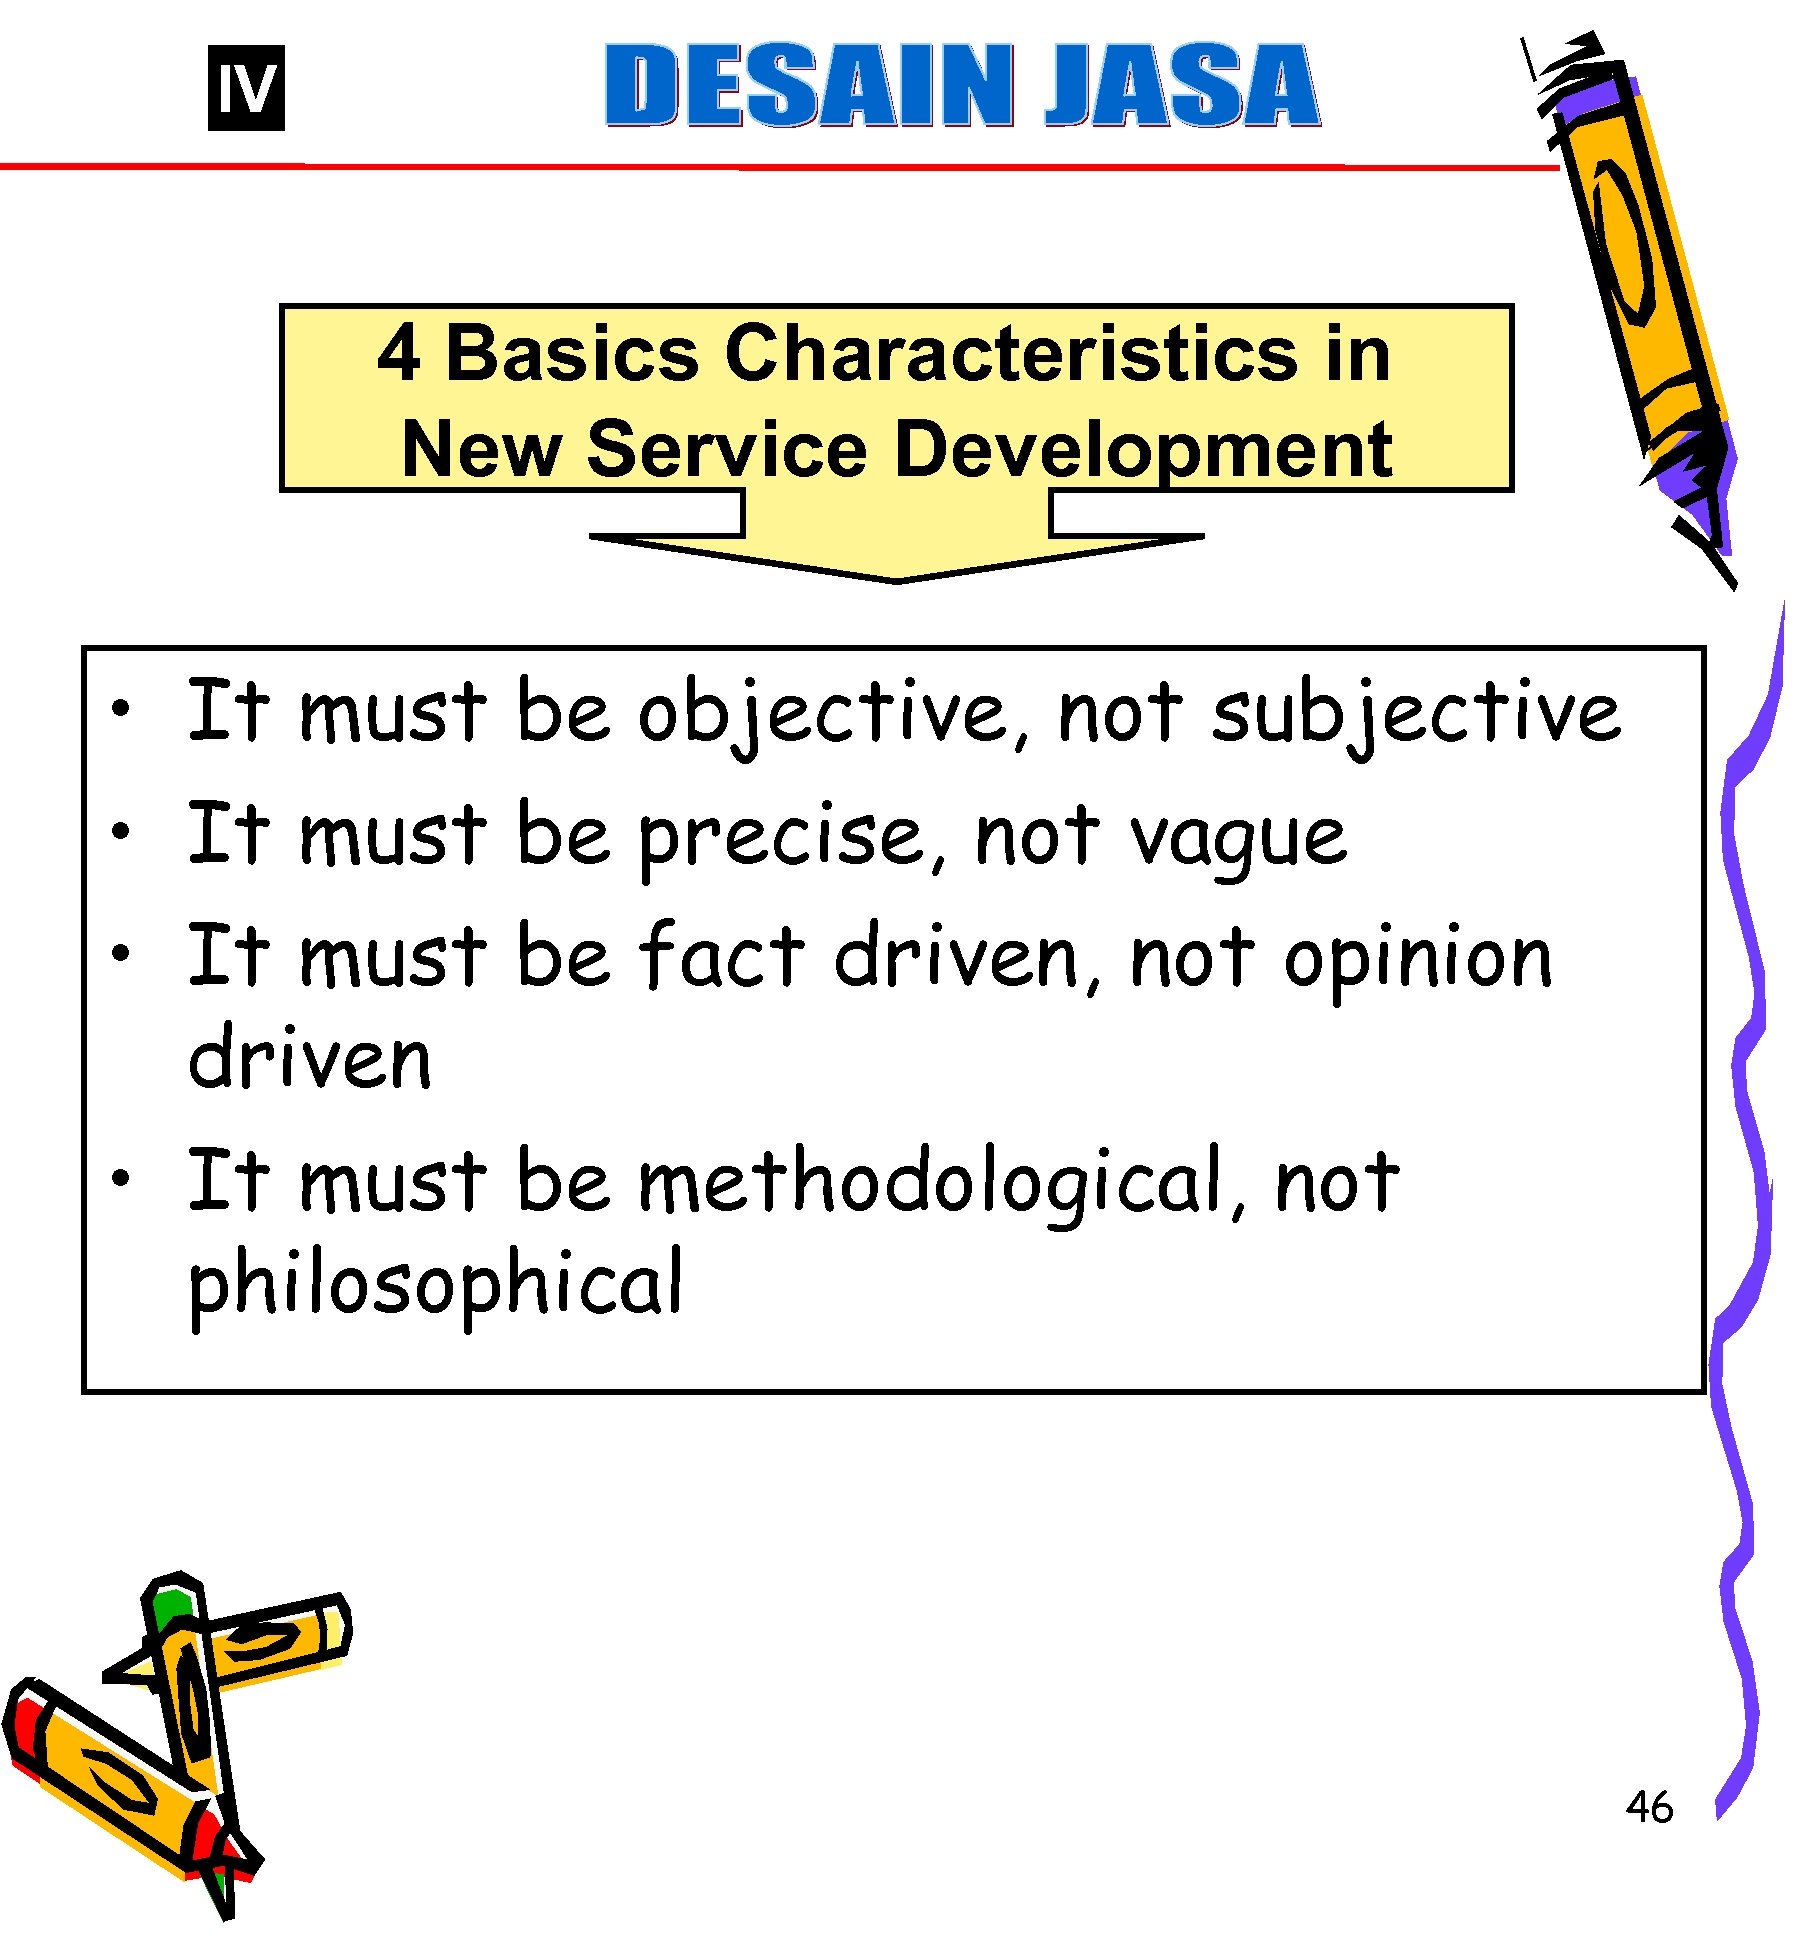 IV 4 Basics Characteristics in New Service Development • It must be objective, not